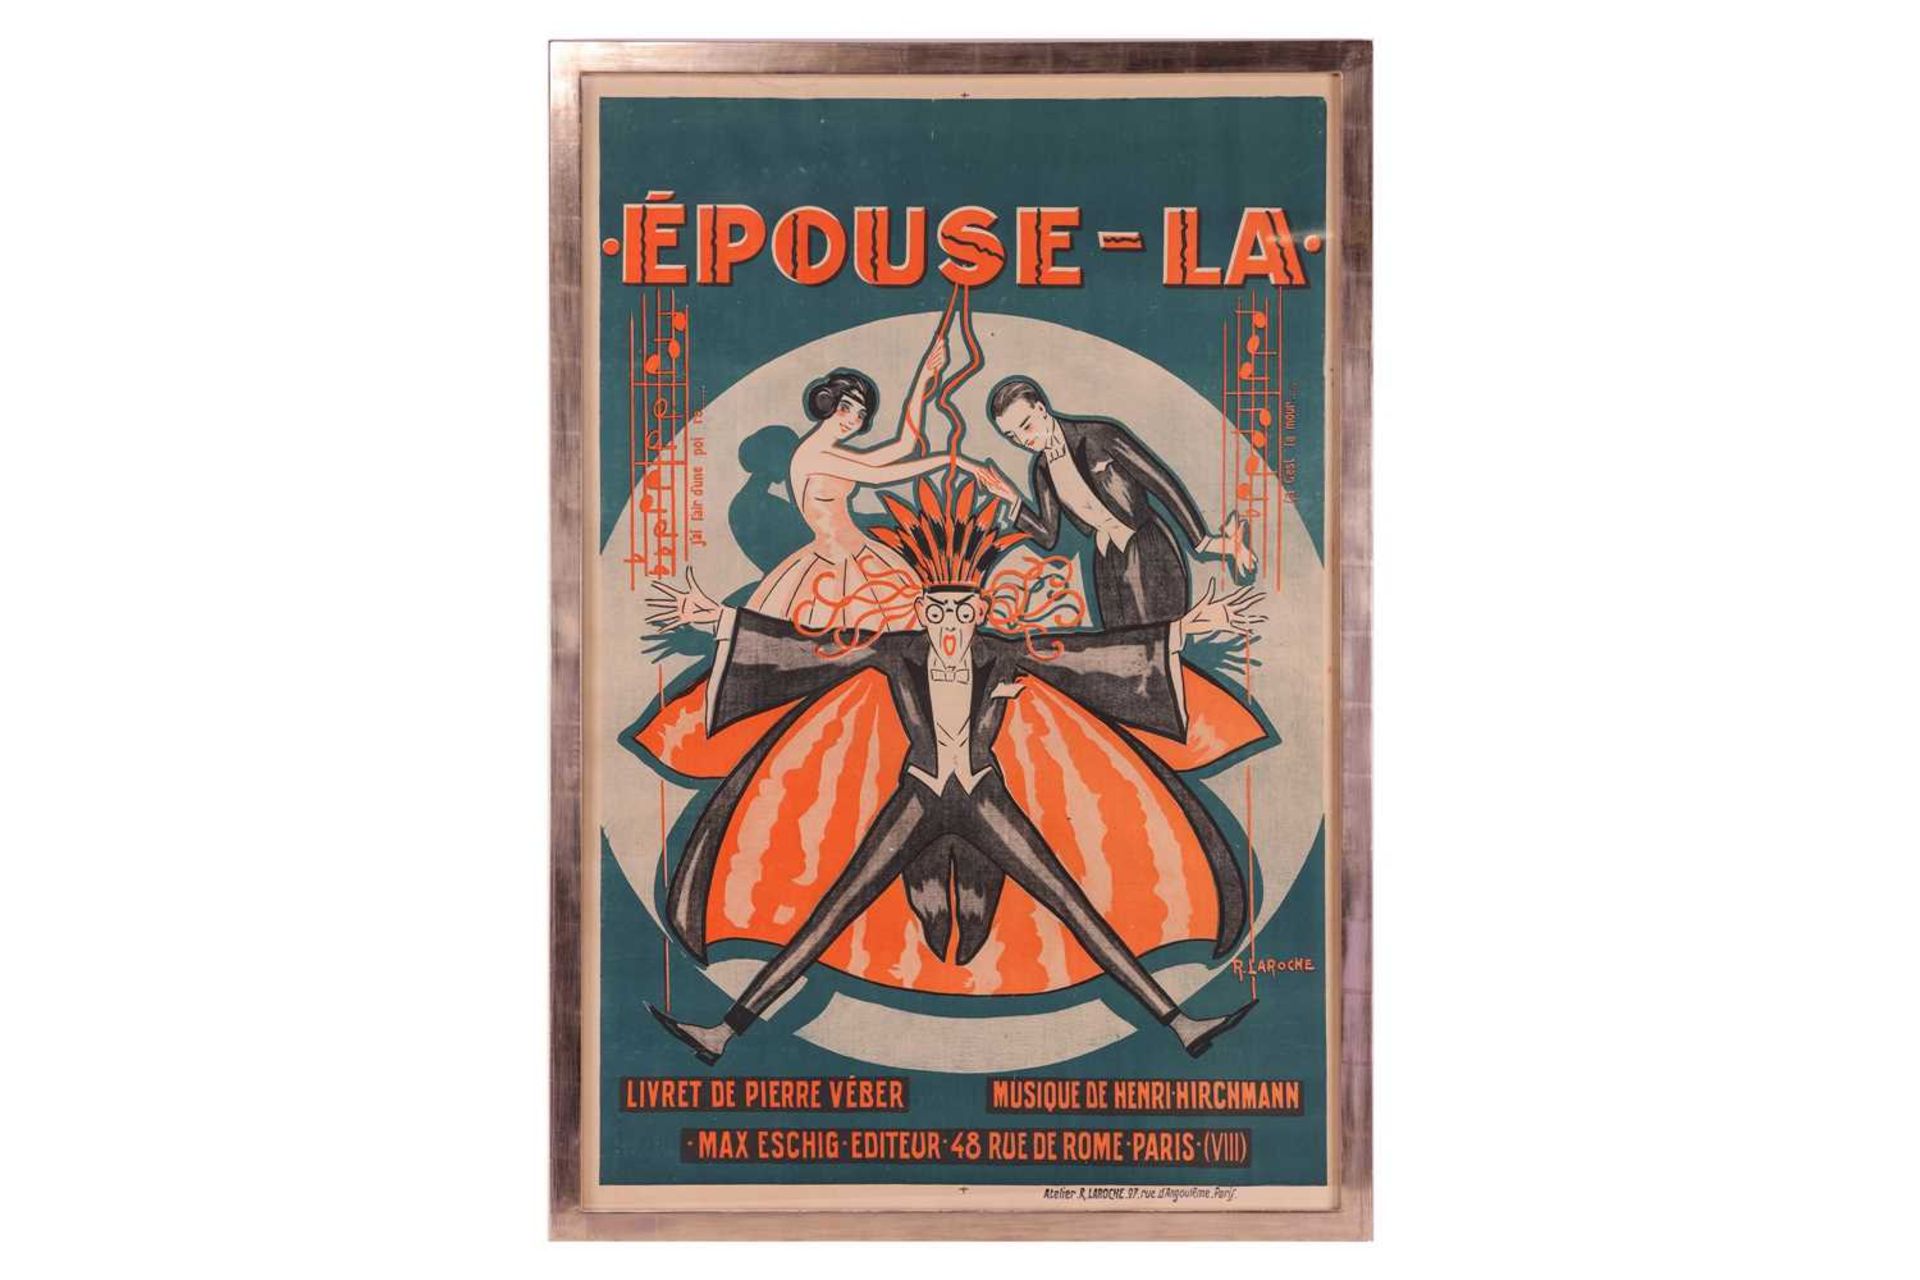 R Laroche (20th century), 'Épouse-La', a French art deco lithographic poster, 117 cm x 78 cm, framed